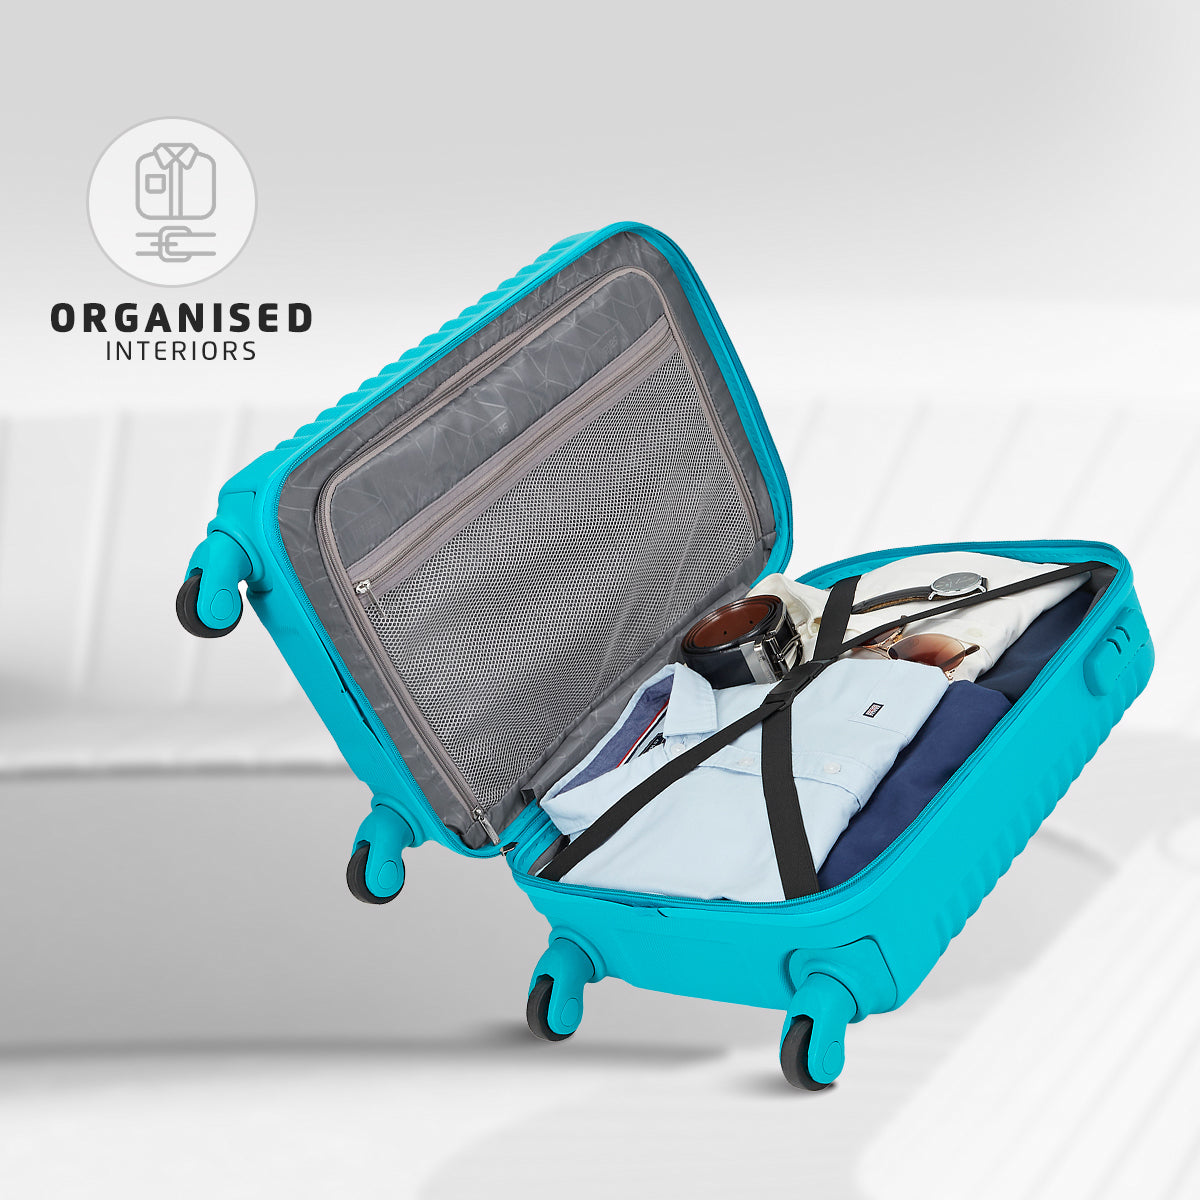 Safari Aerodyne Cyan Lightweight Trolley Bag with TSA Lock and Airline Compliant Sizing